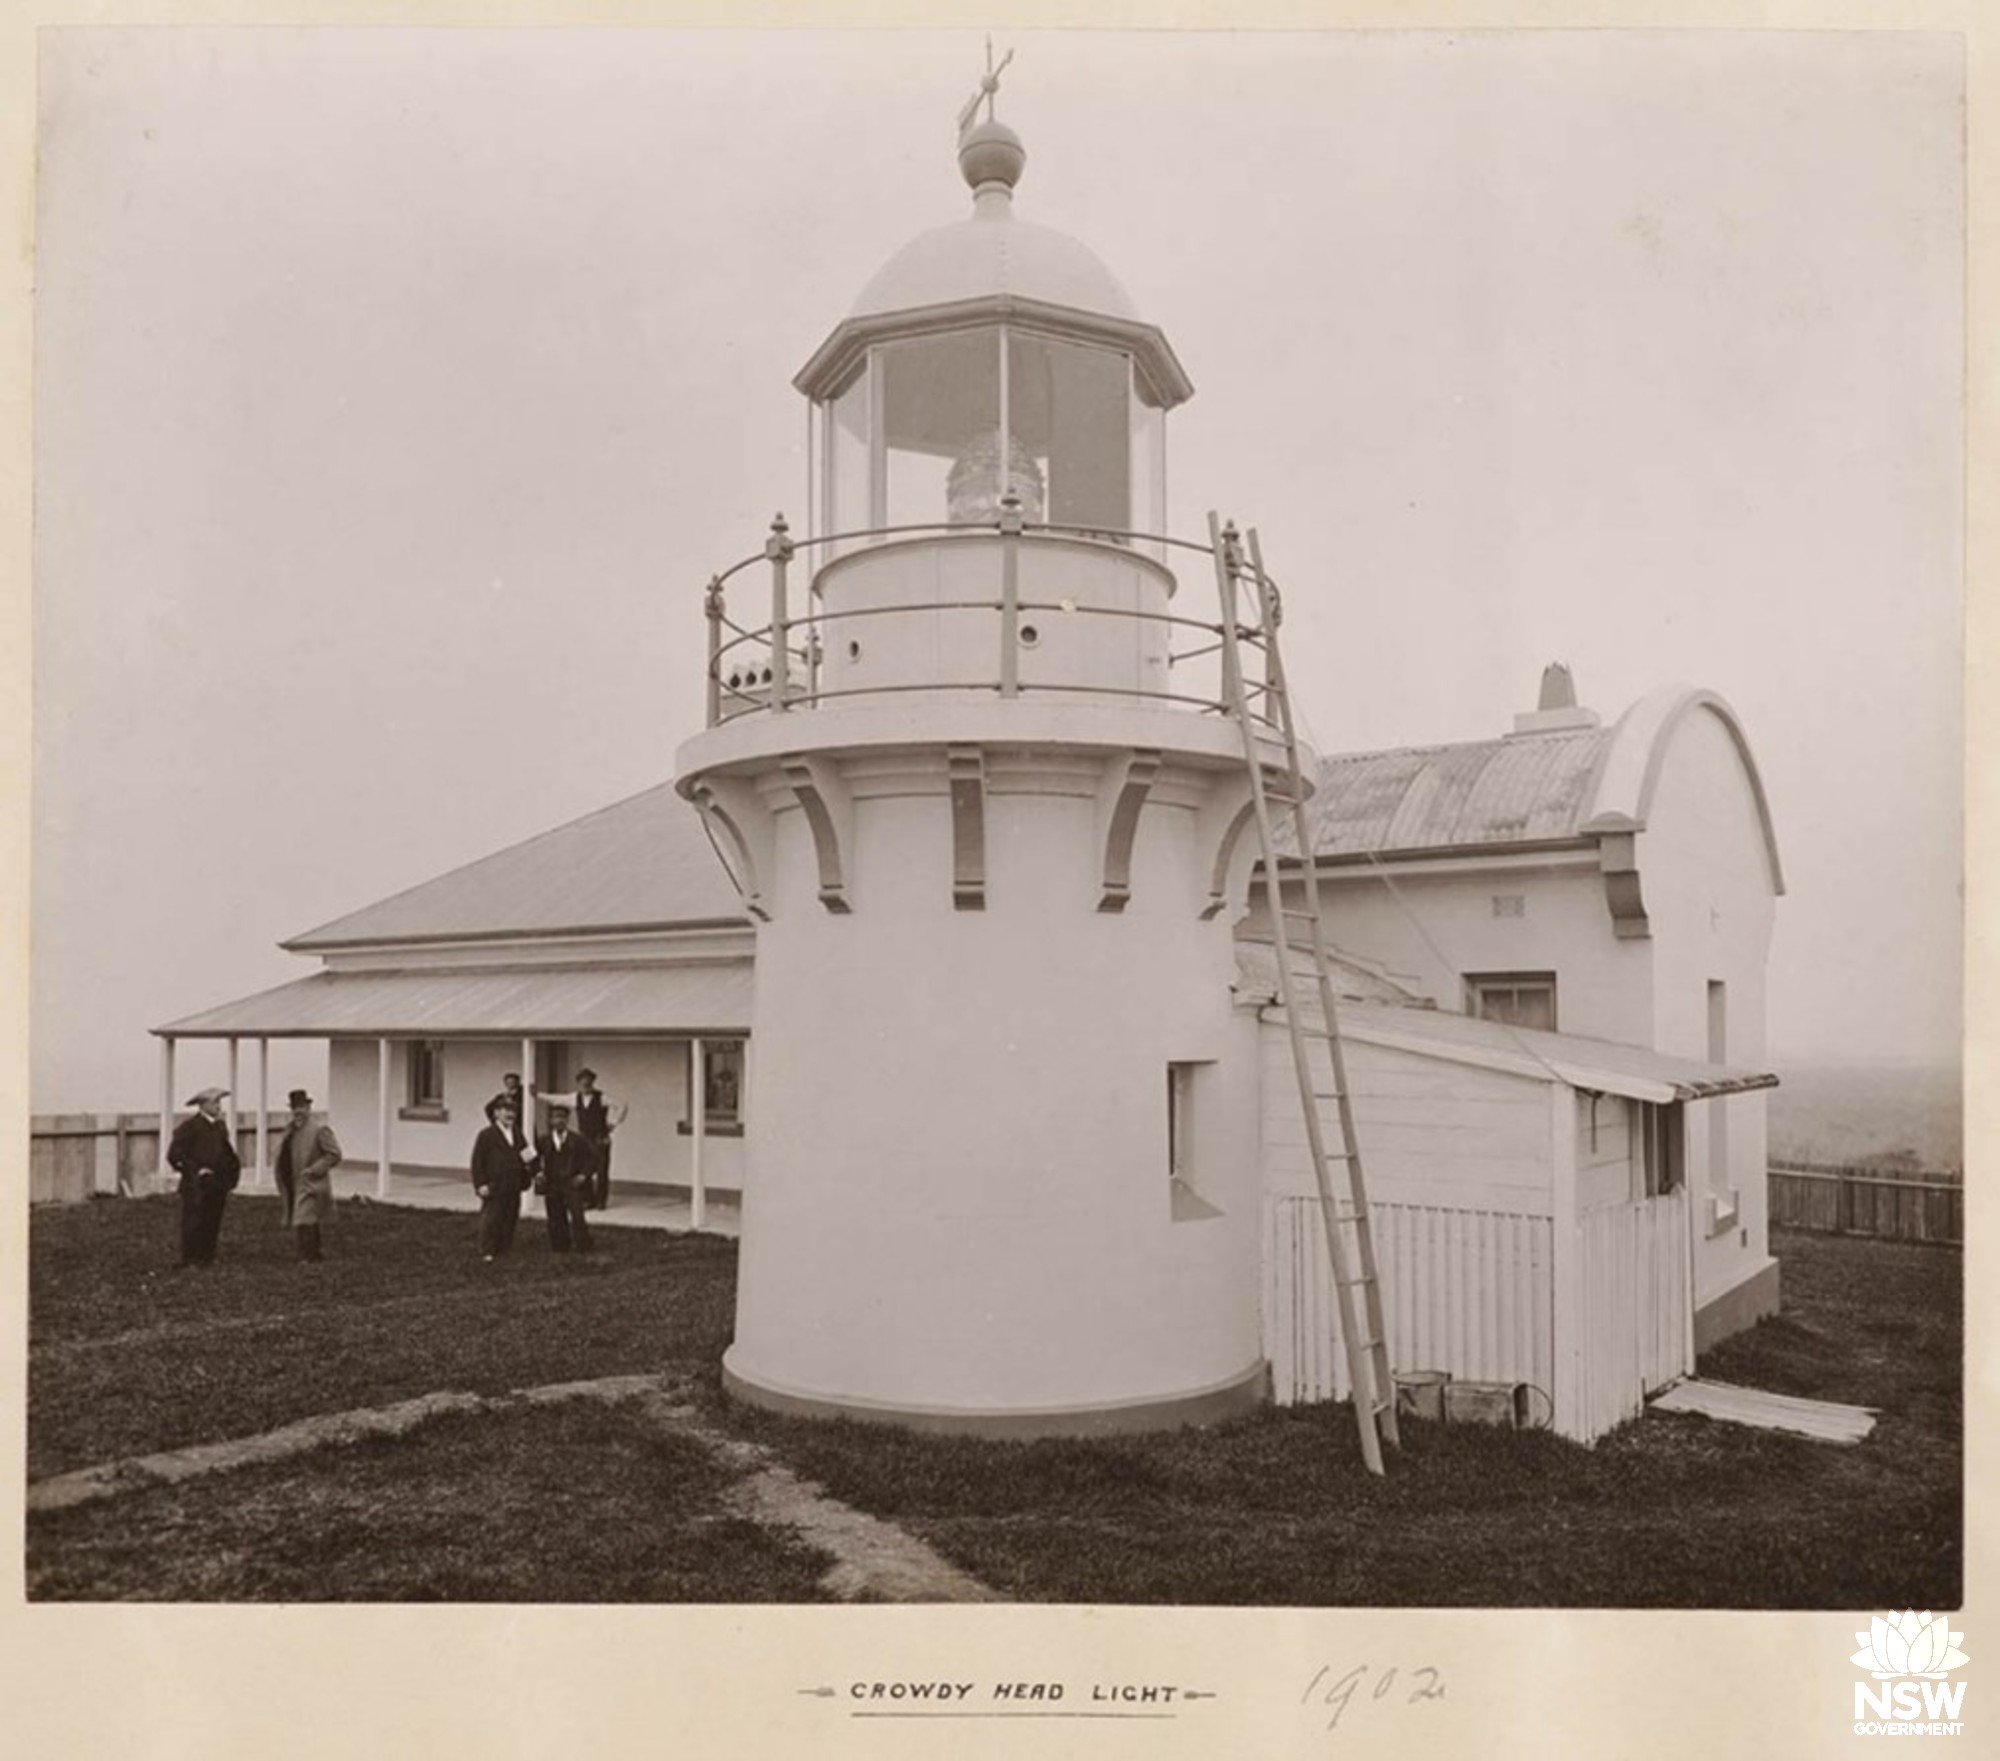 Crowdy Head Lighthouse - late nineteenth century